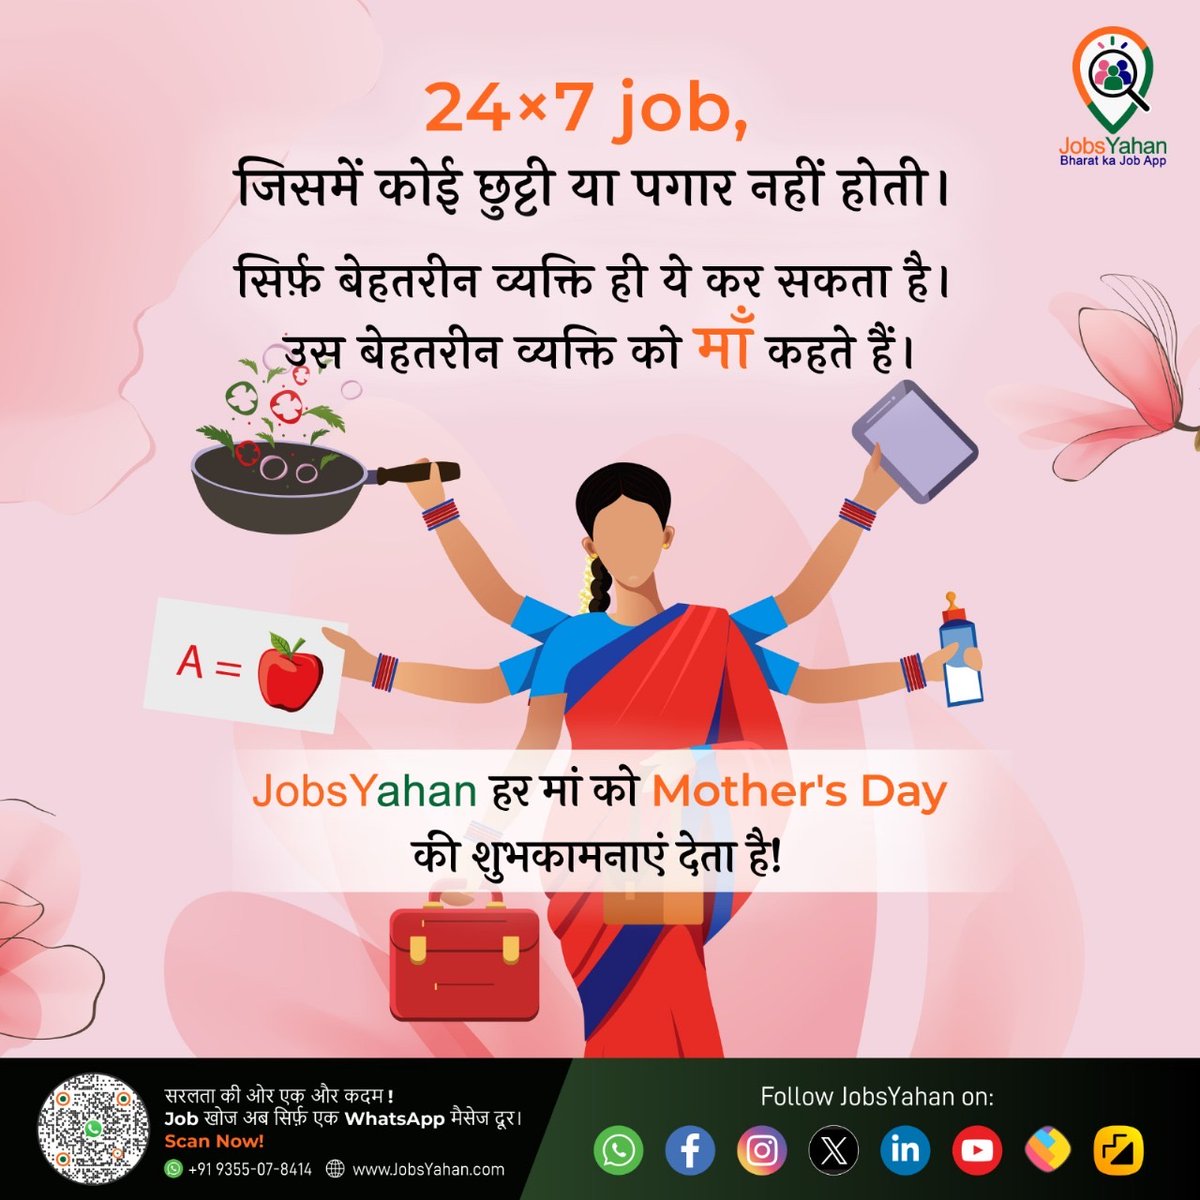 इस Mother's day पर, JobsYahan हर मां की दृढ़ता और विलक्षणता को नमन करता है।

#JobsYahan #HappyMothersDay #MothersLove #UnbreakableBond #MothersDaySpecial #FamilyFirst #LocalJobs #WorkLifeBalance #EmpoweringCommunities